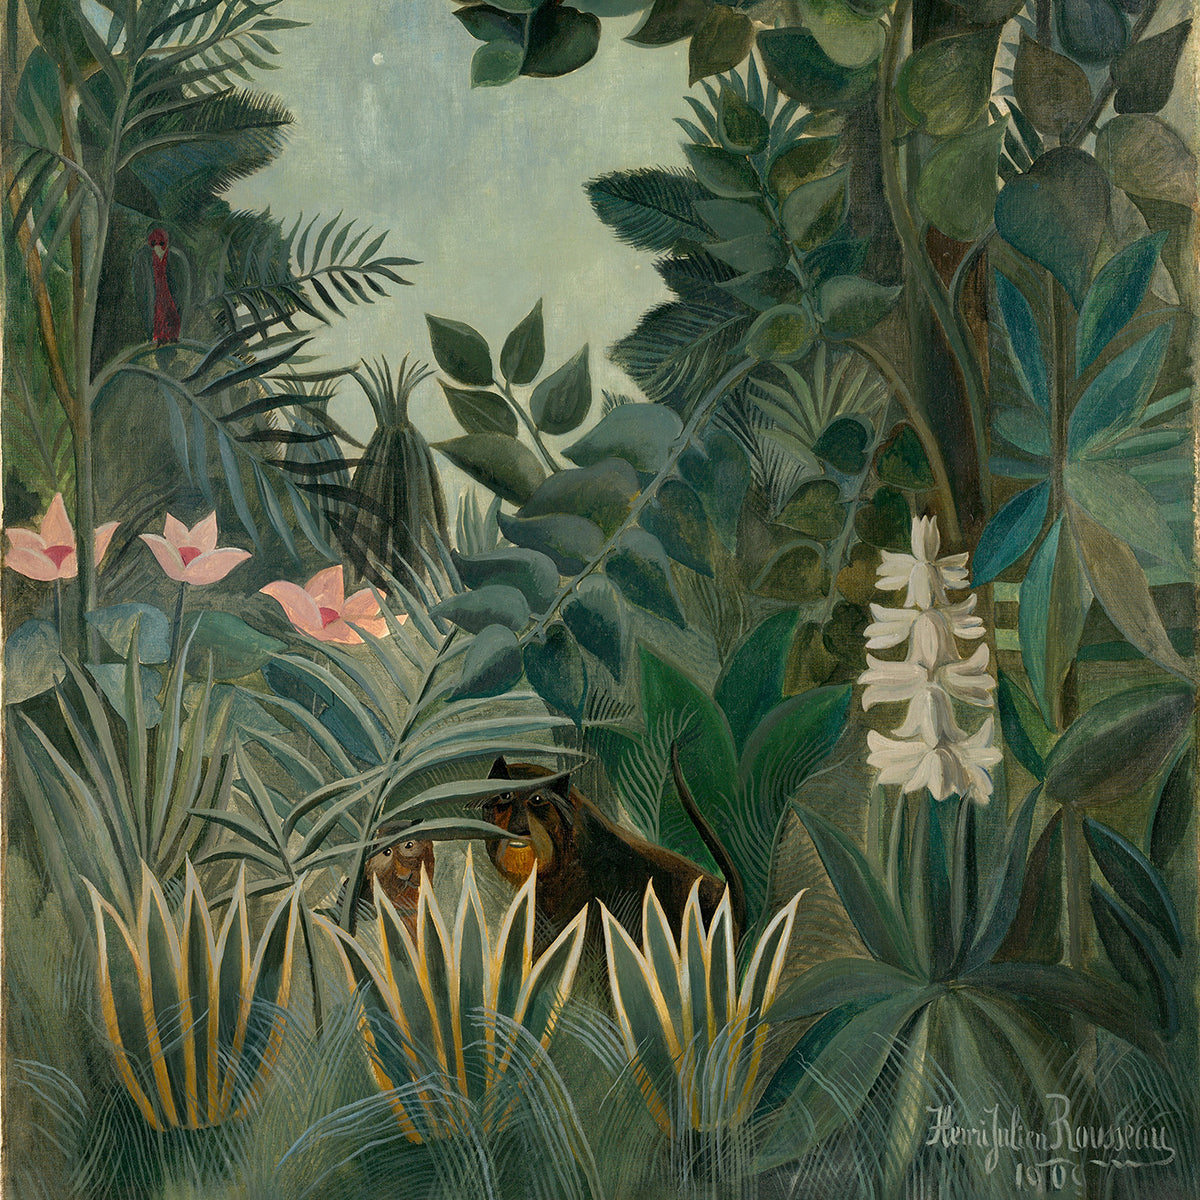 The Equatorial Jungle by Henri Rousseau